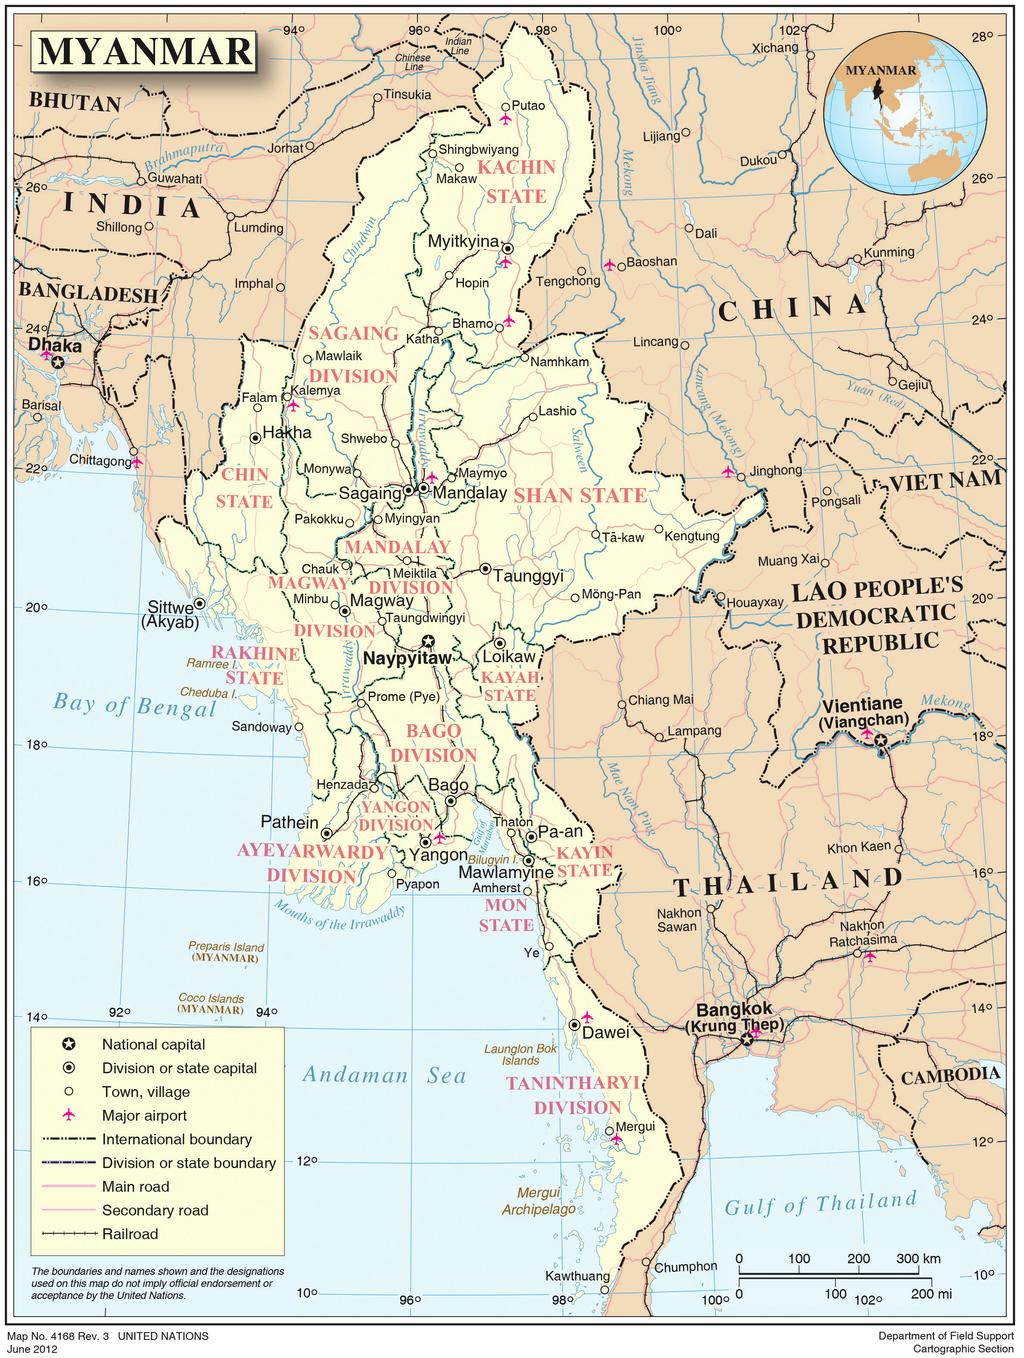 Source: Map of Myanmar, no. 4168 Rev.